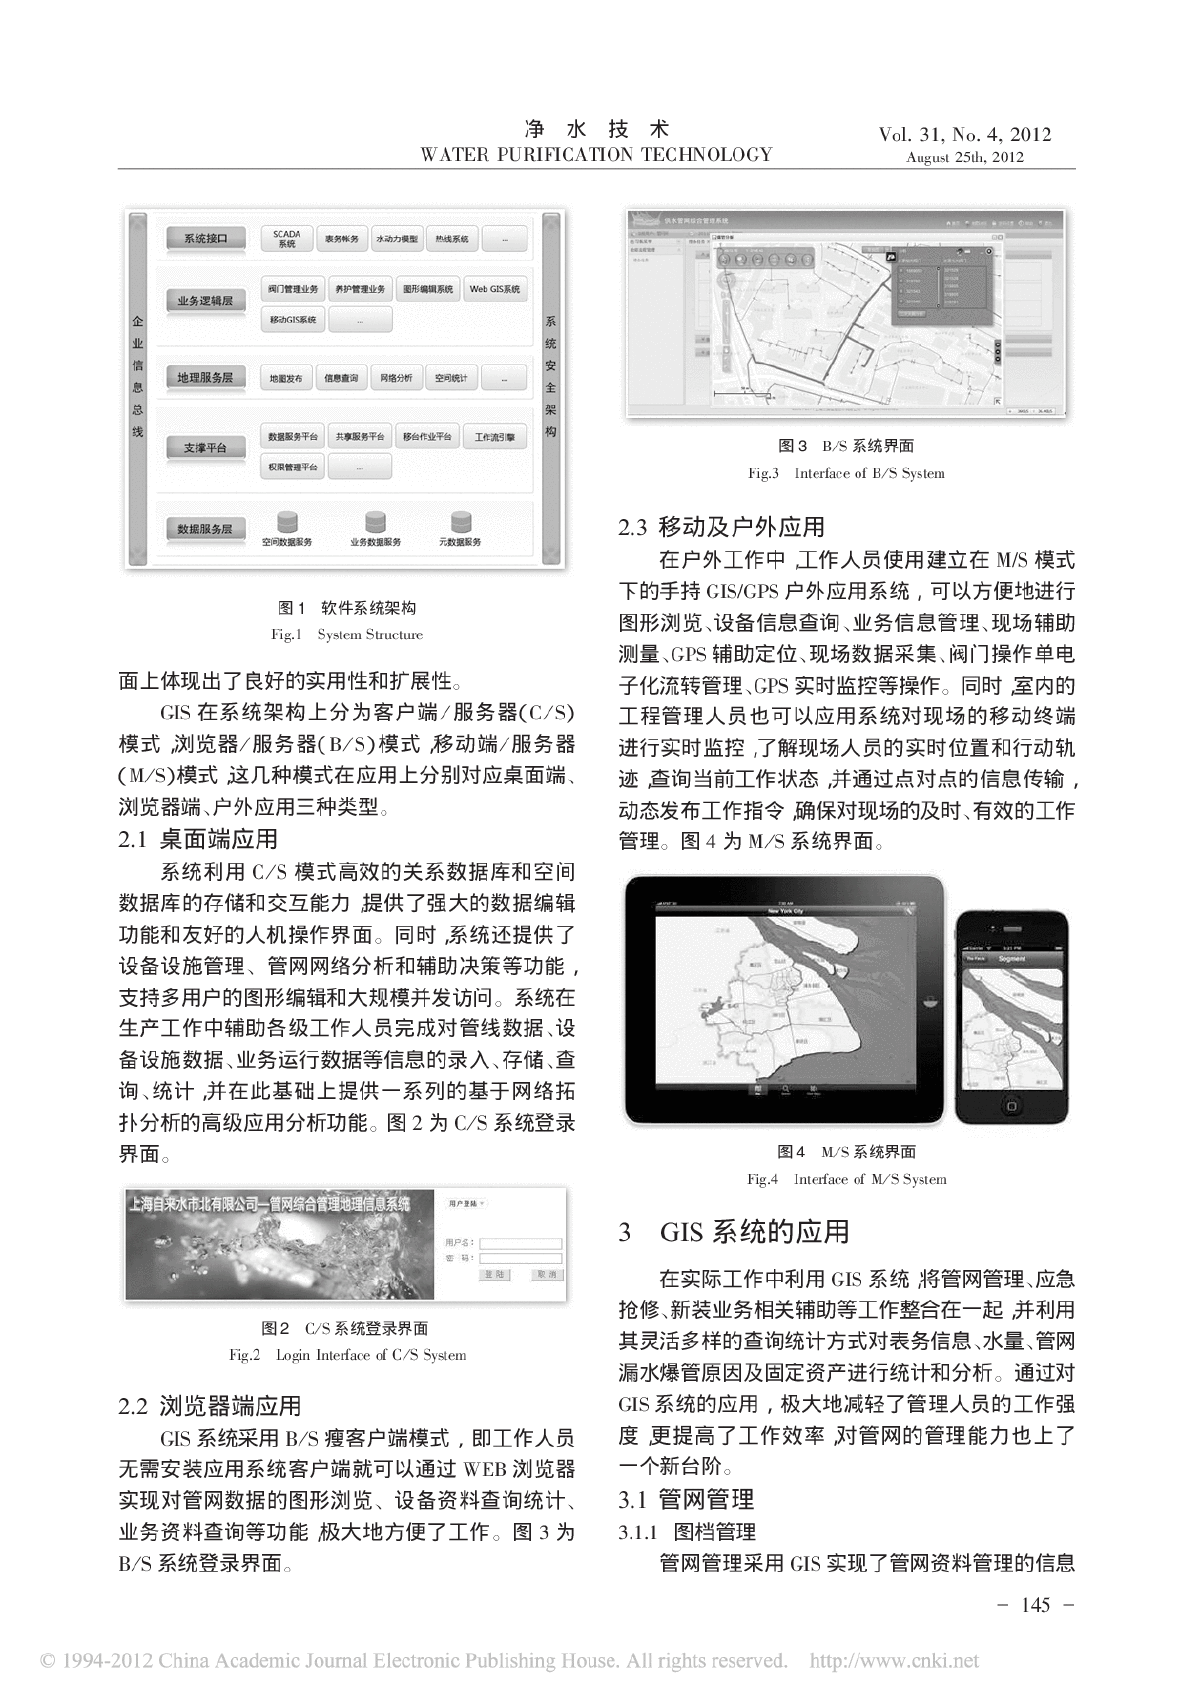 GIS 在沪北供水管网管理中的应用-图二